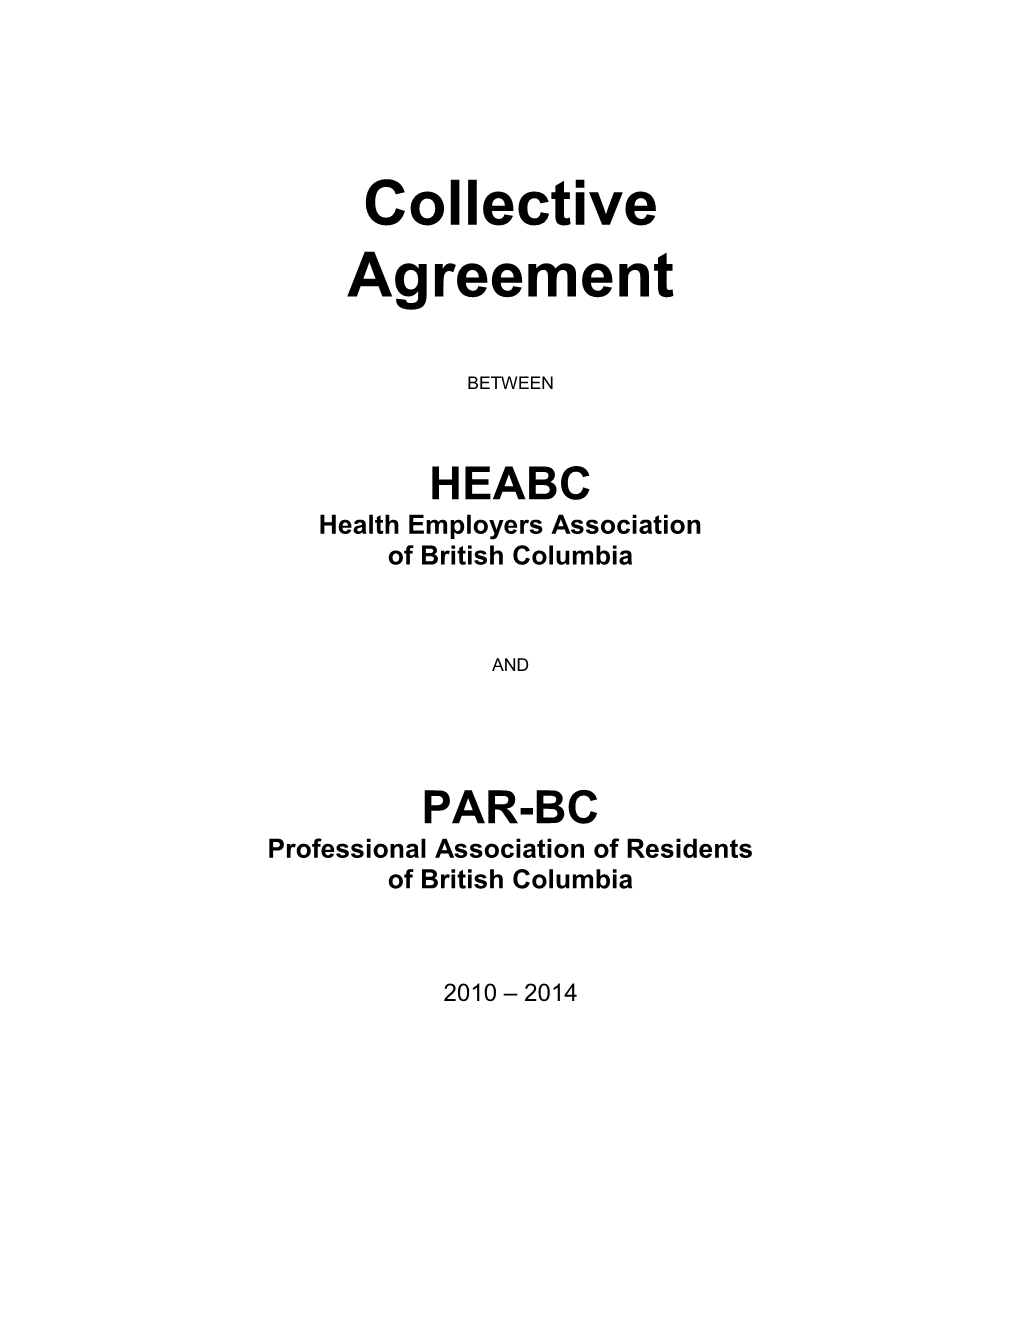 View the PAR Collective Agreement